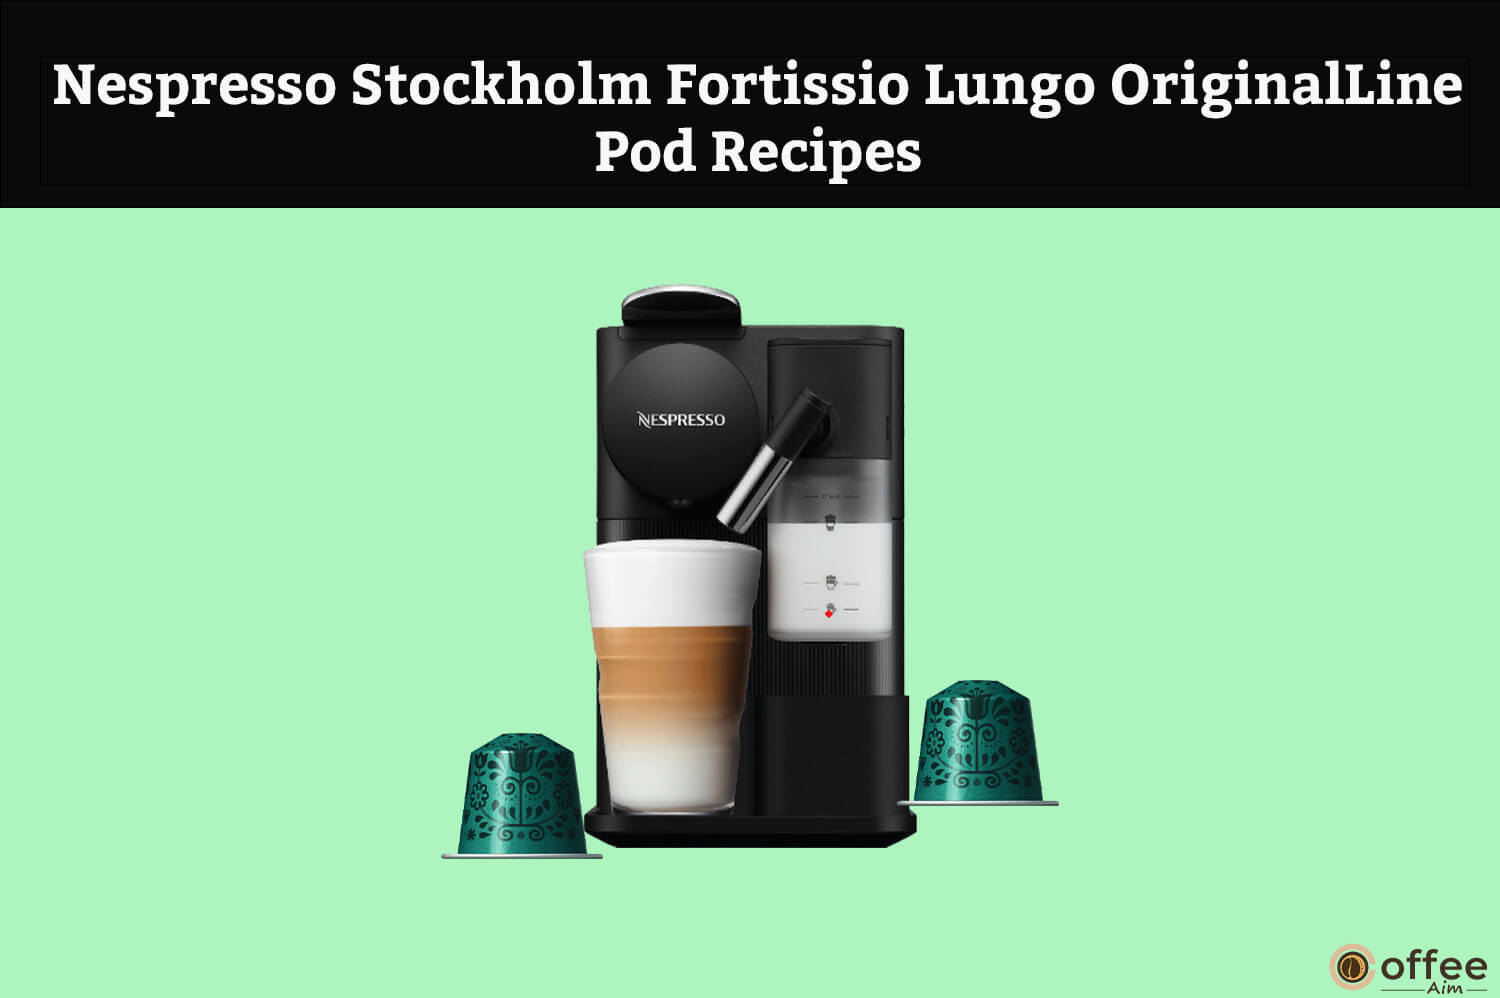 Feature image for the article "Nespresso Stockholm Fortissio Lungo OriginalLine Pod Recipes"